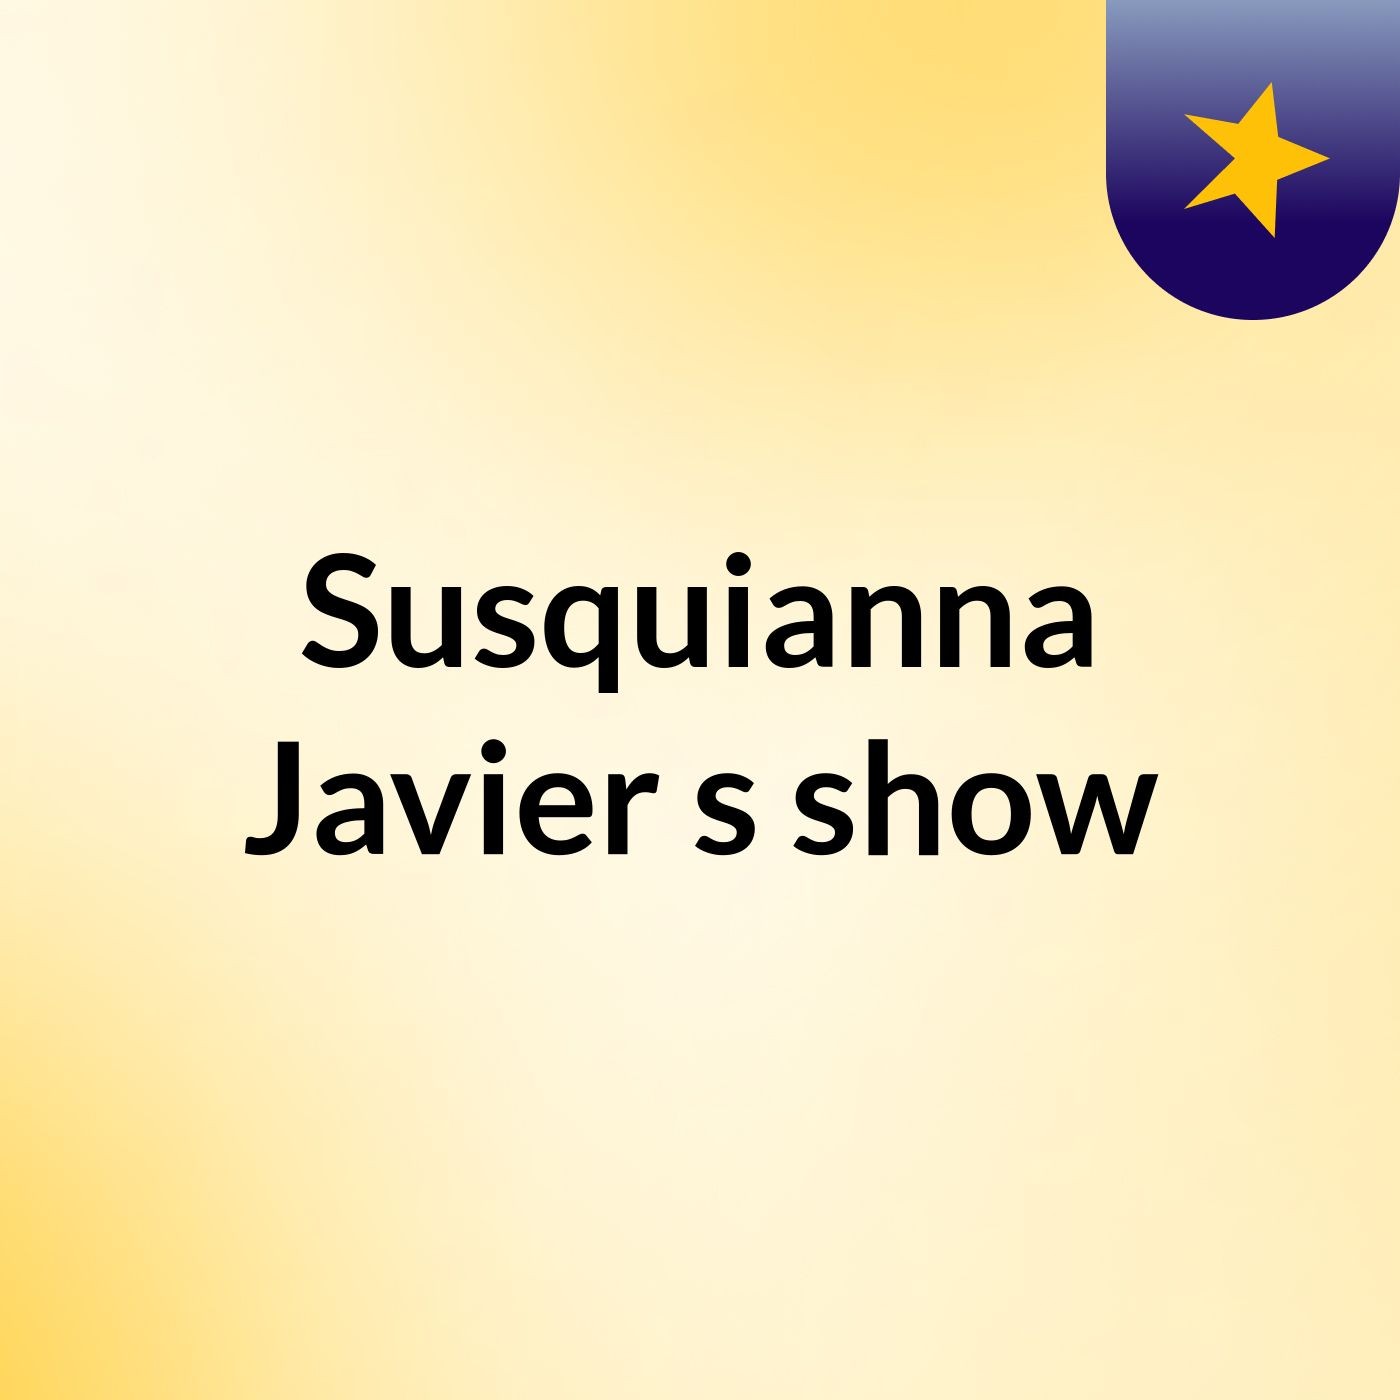 Susquianna Javier's show